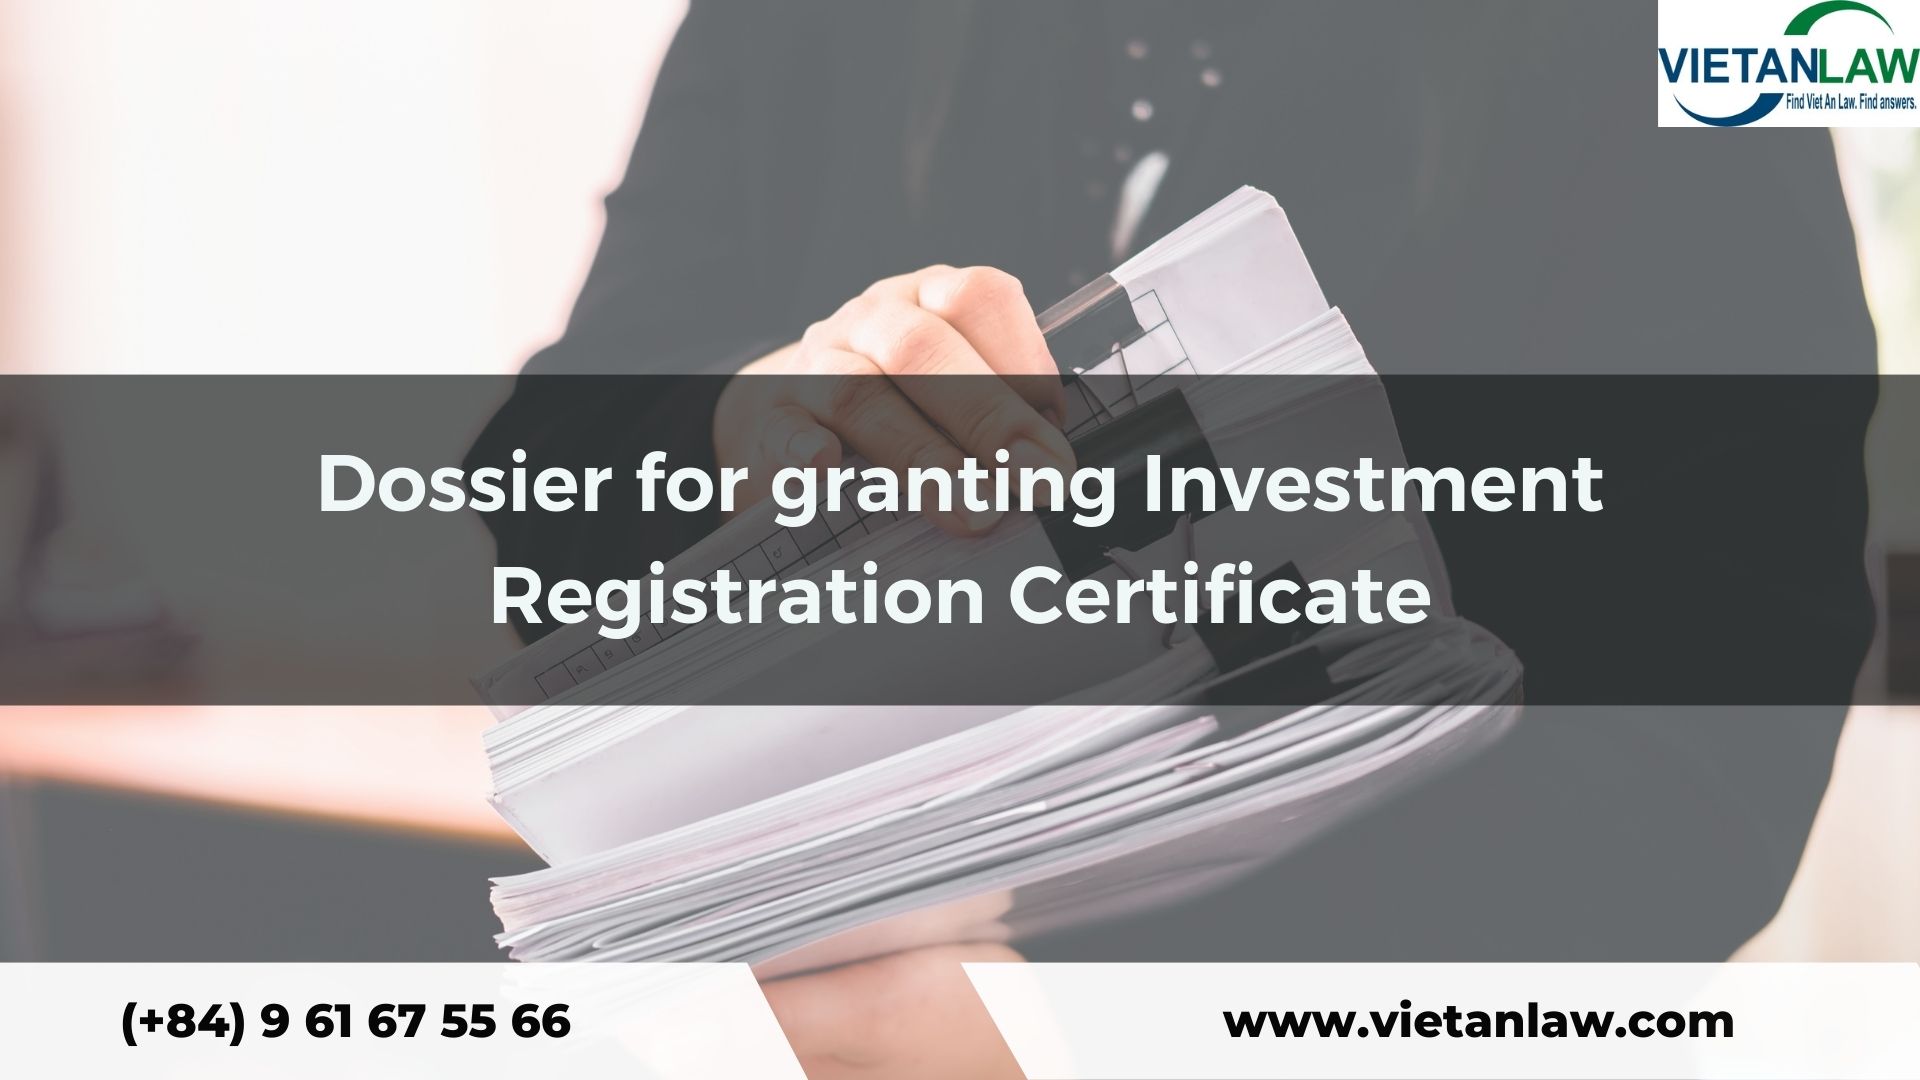 Dossier for granting Investment Registration Certificate